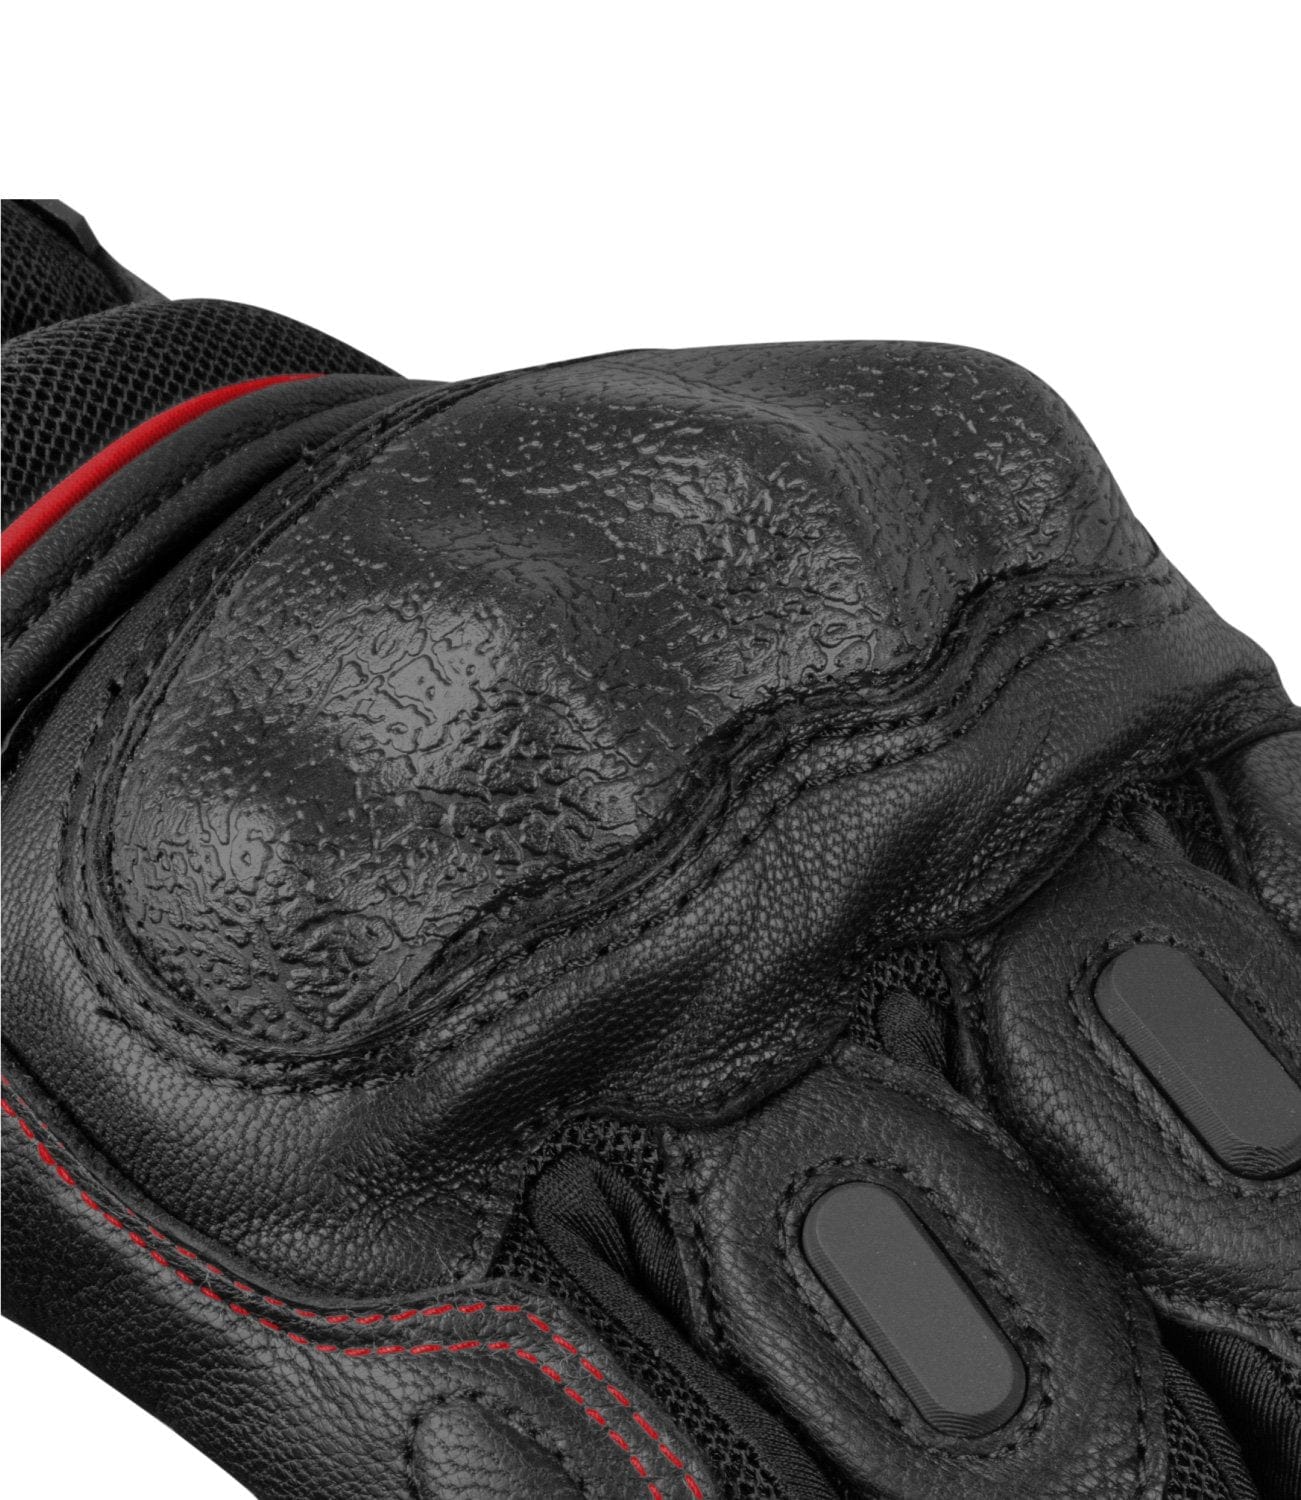 Rynox Tornado Pro 3 Gloves Black Red - Destination Moto